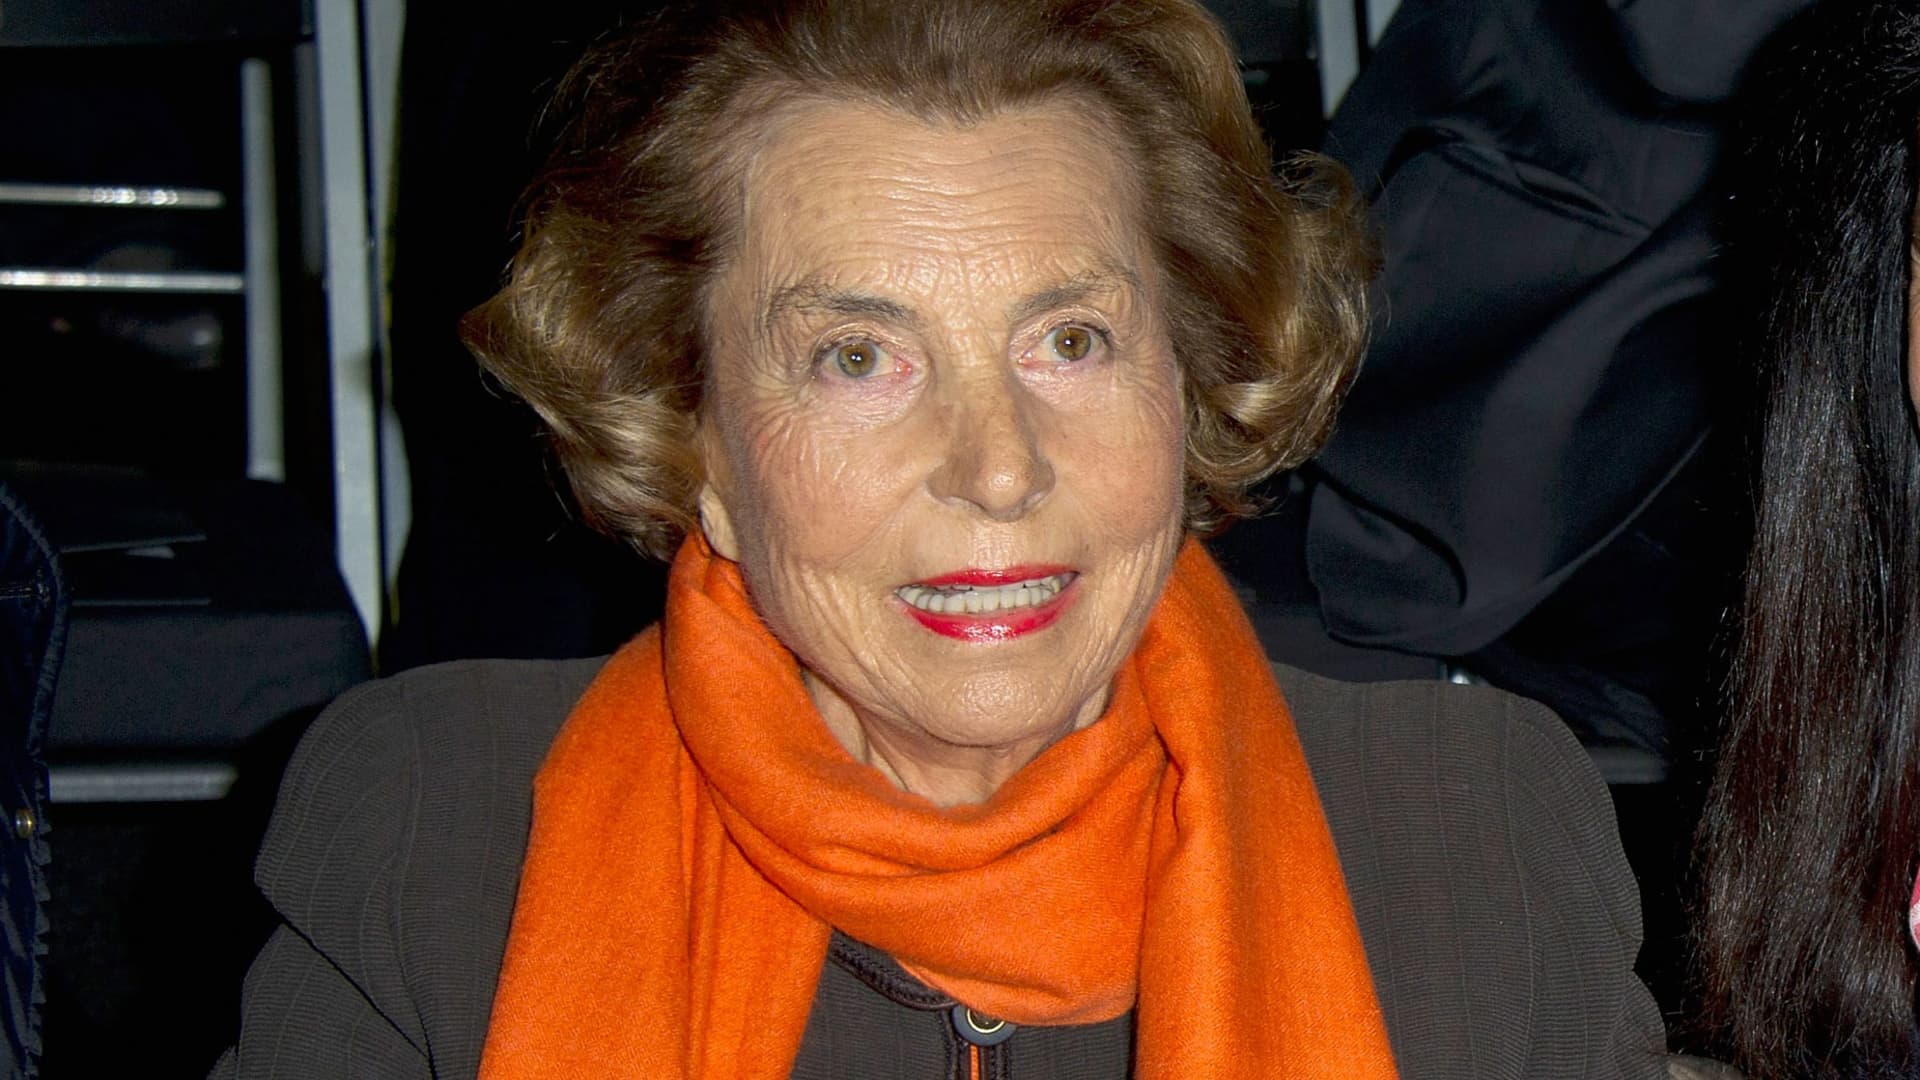 World's richest woman Liliane Bettencourt has died at age 94